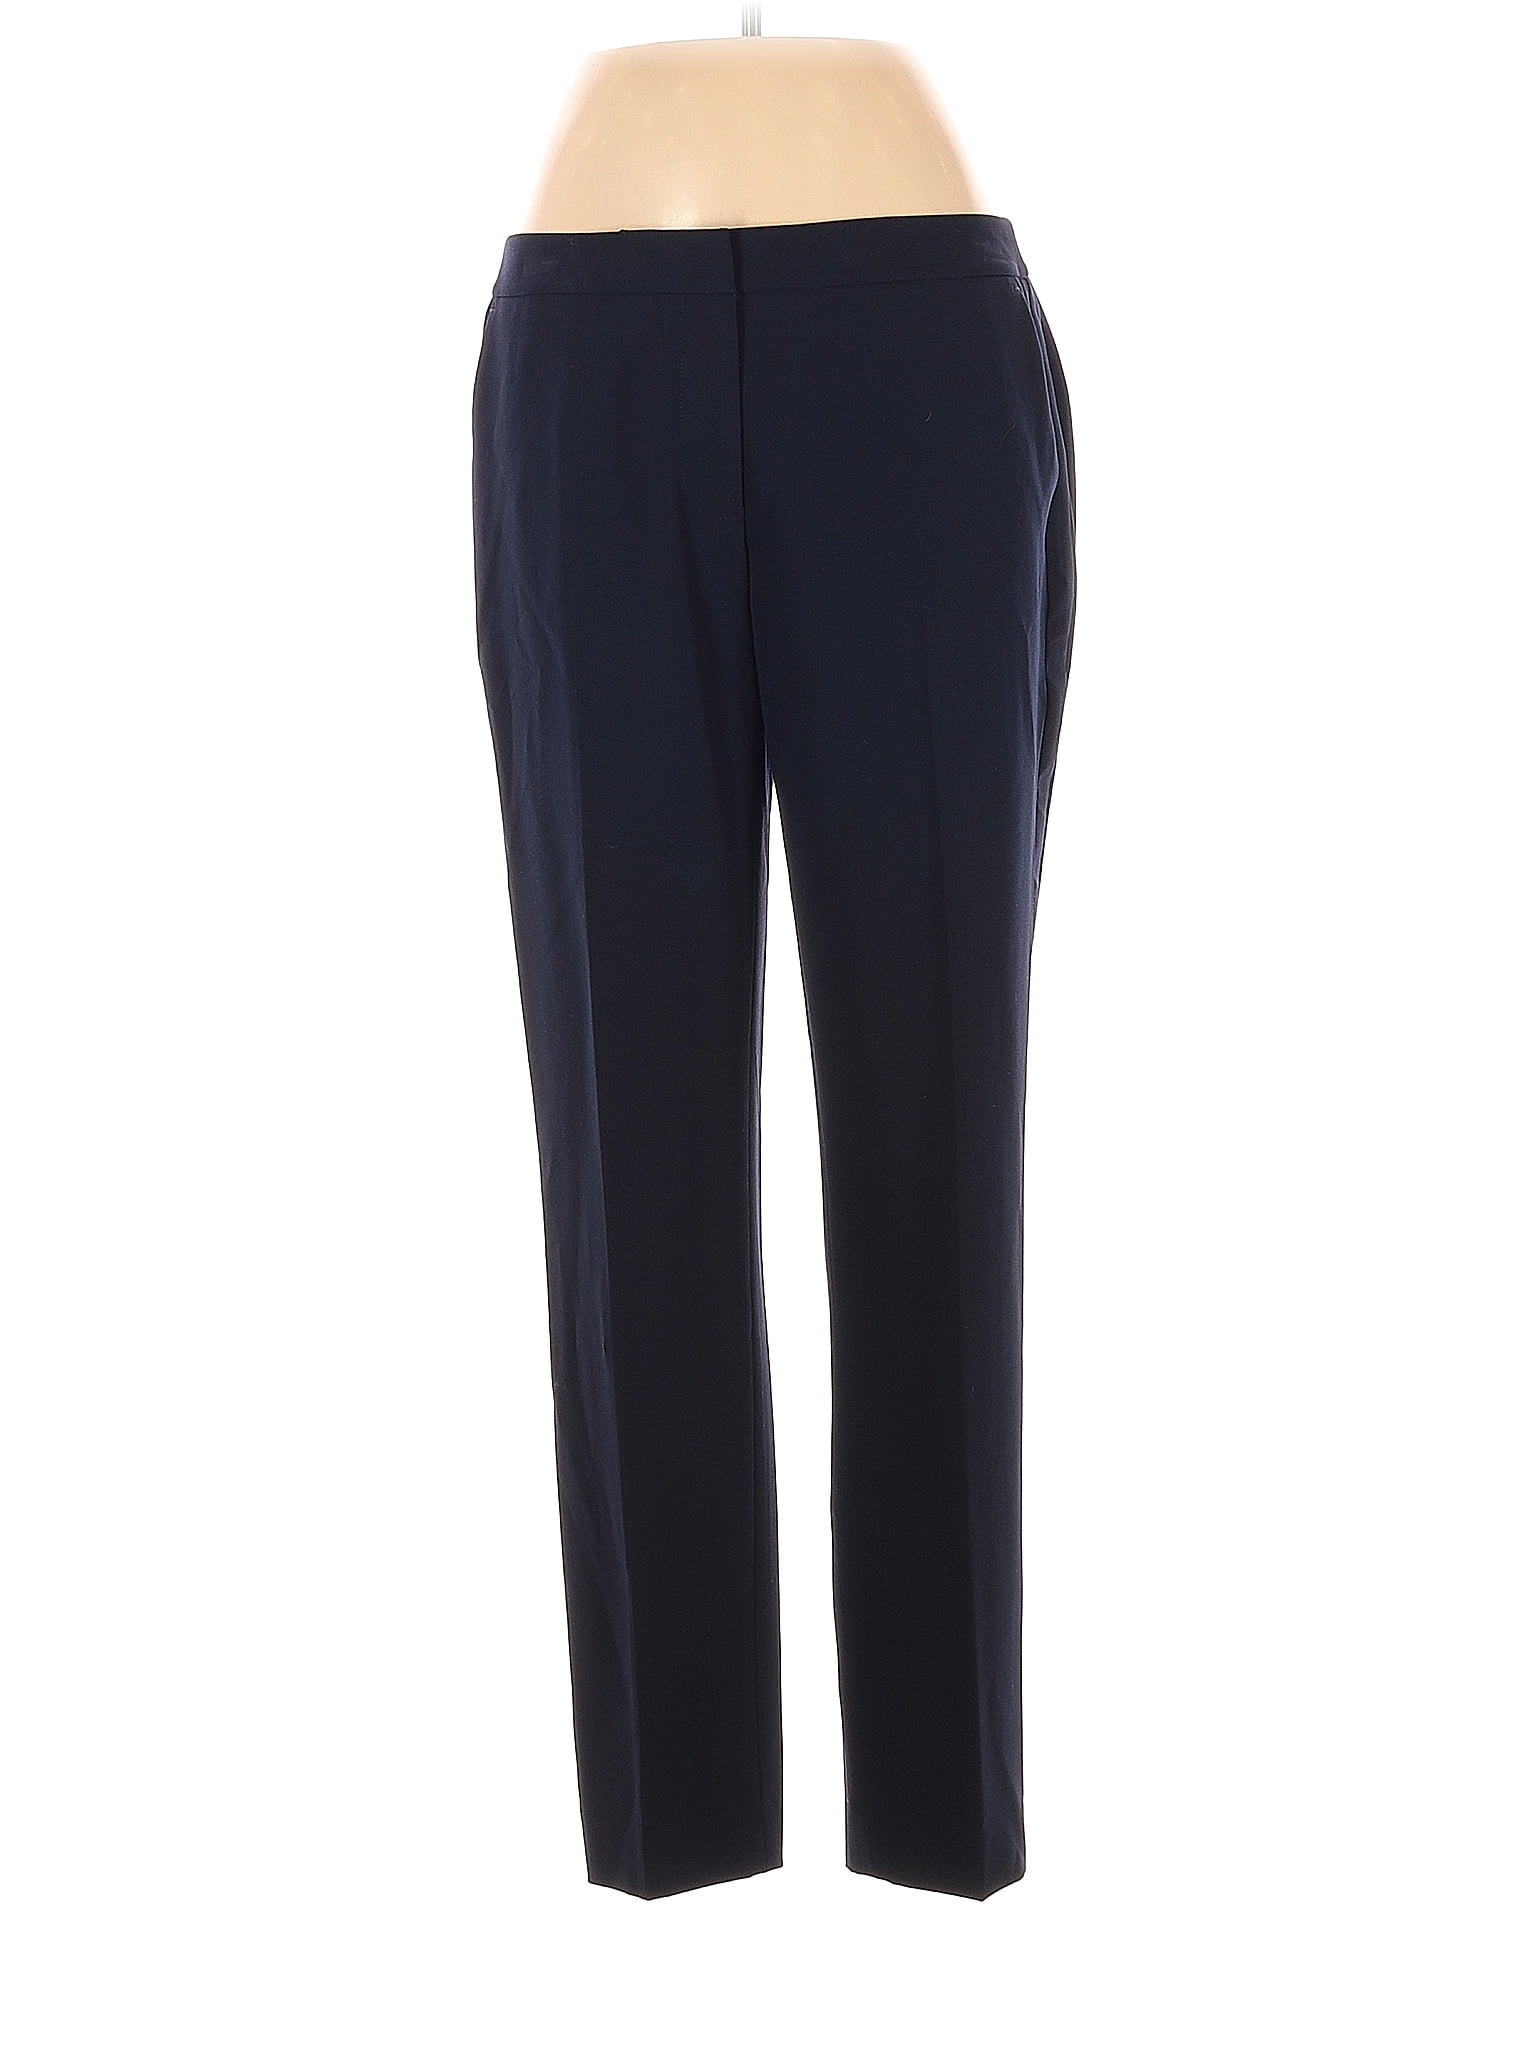 Tommy Hilfiger Navy Blue Dress Pants Size 6 - 87% off | ThredUp